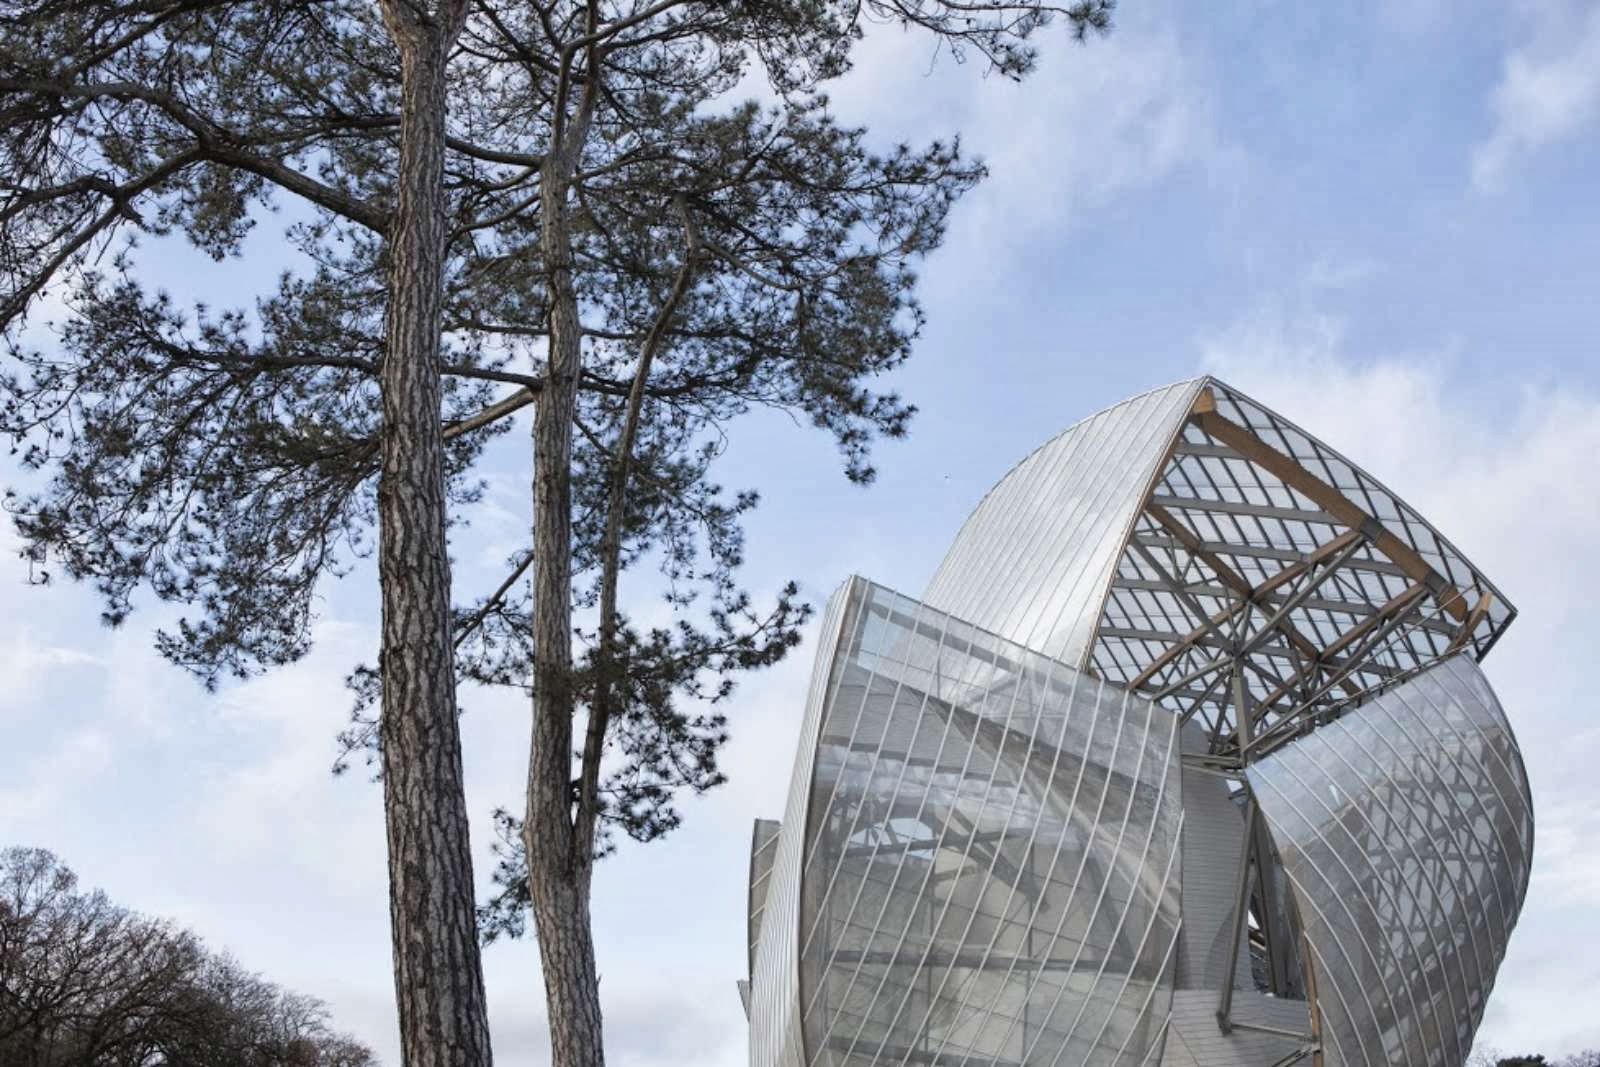 architecture now and The Future: FONDATION LOUIS-VUITTON POUR LA CRÉATION  BY FRANK GEHRY